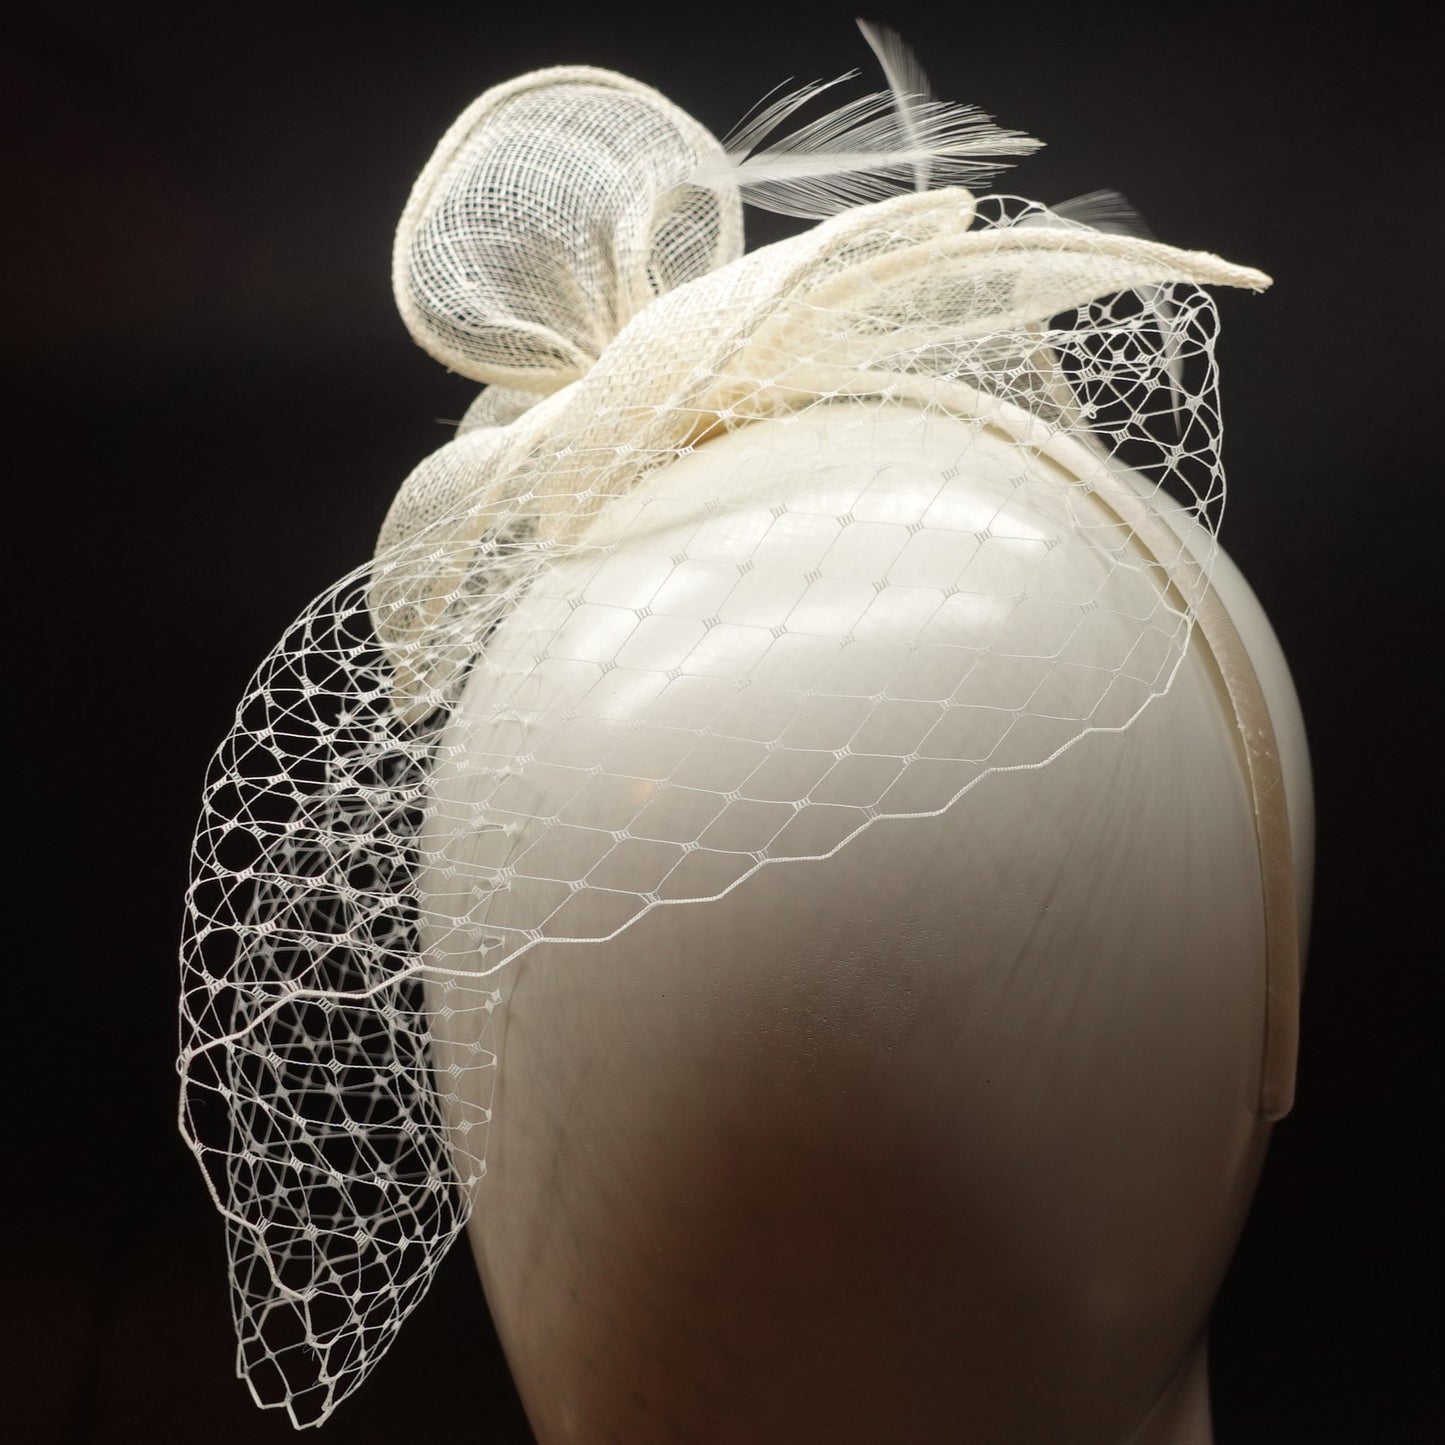 Ivory Ladies Races Weddings Party Fascinator Headband L2063A